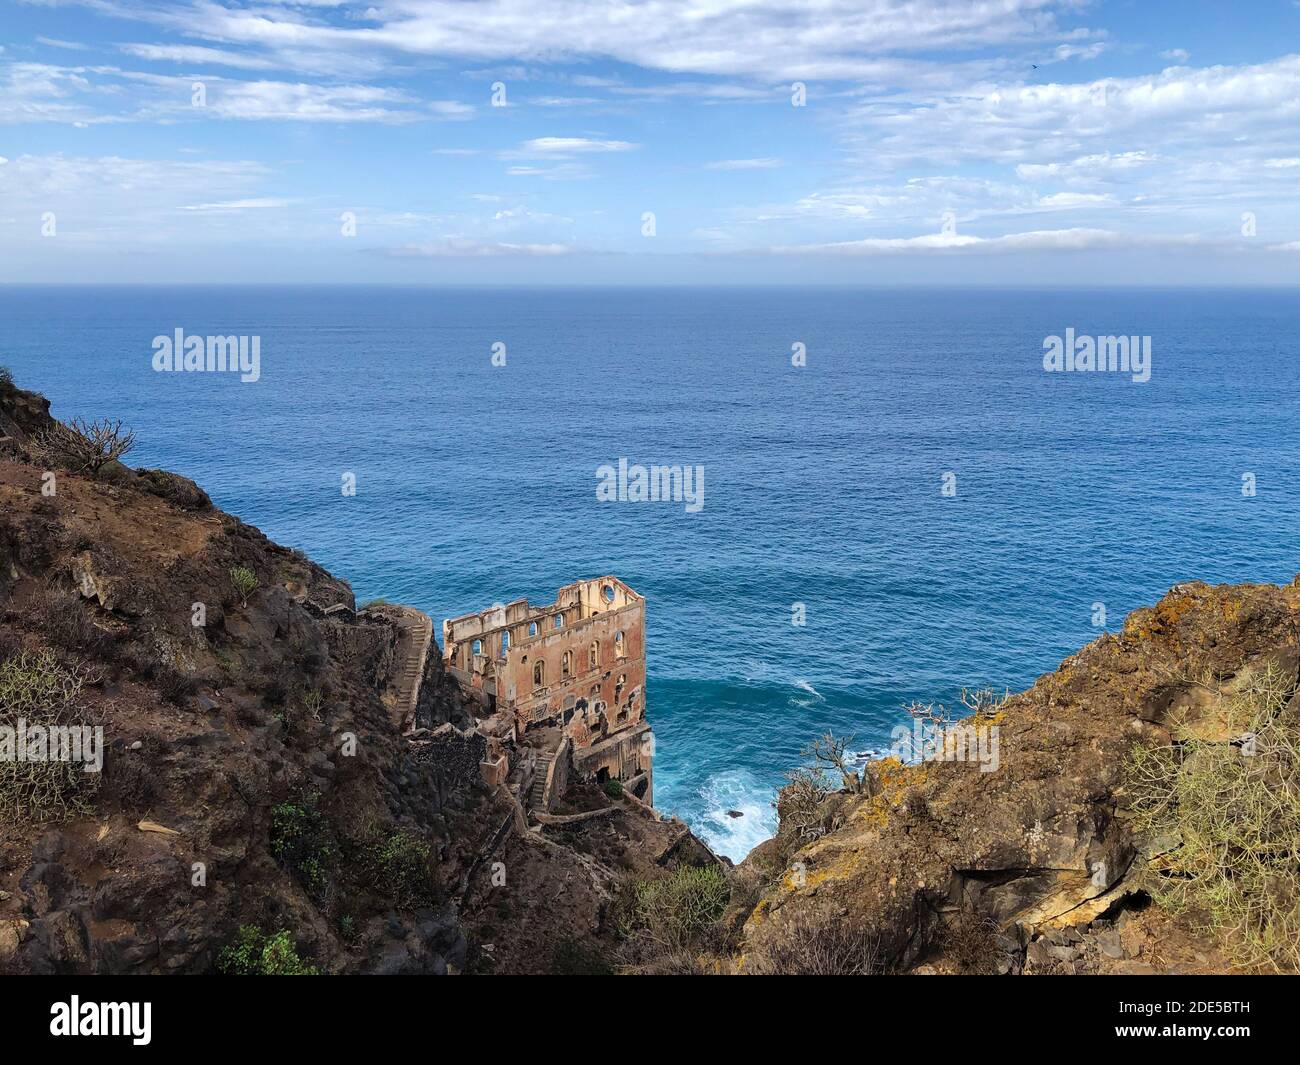 building ruin (Casa del Agua) at coast with ocean background, Tenerife - Stock Photo